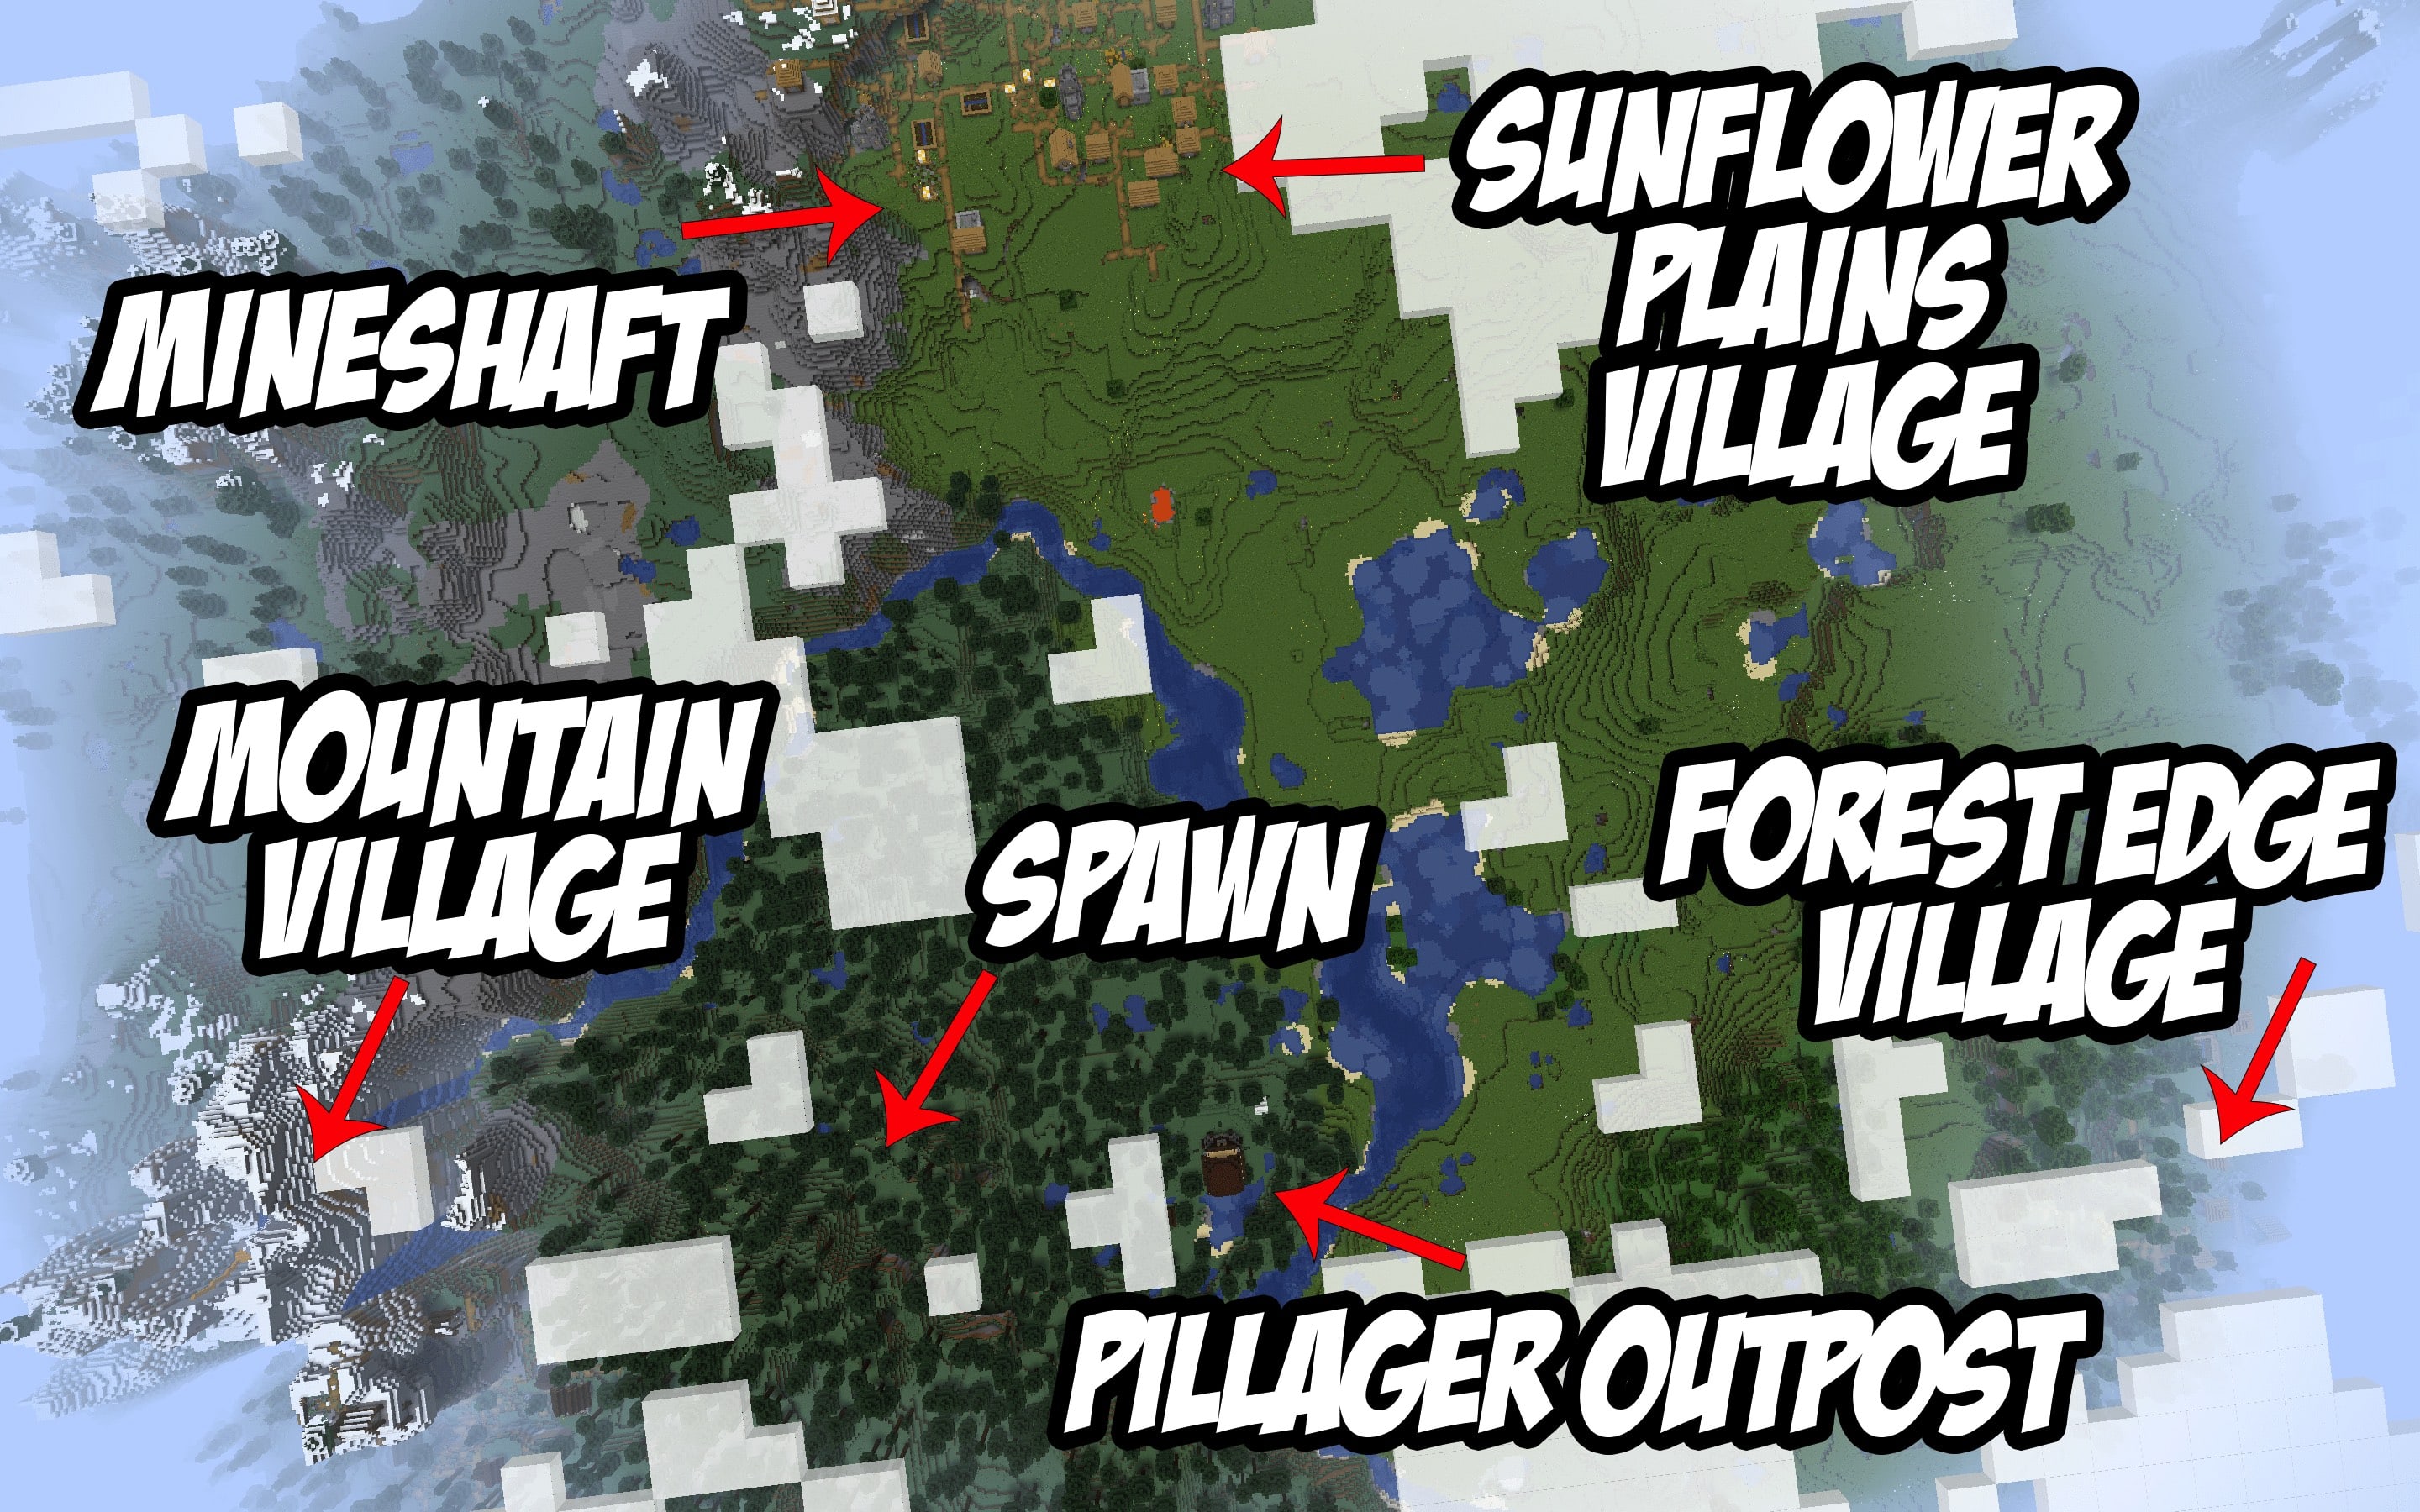 Pillager Outpost, 3 Villages, Mineshaft